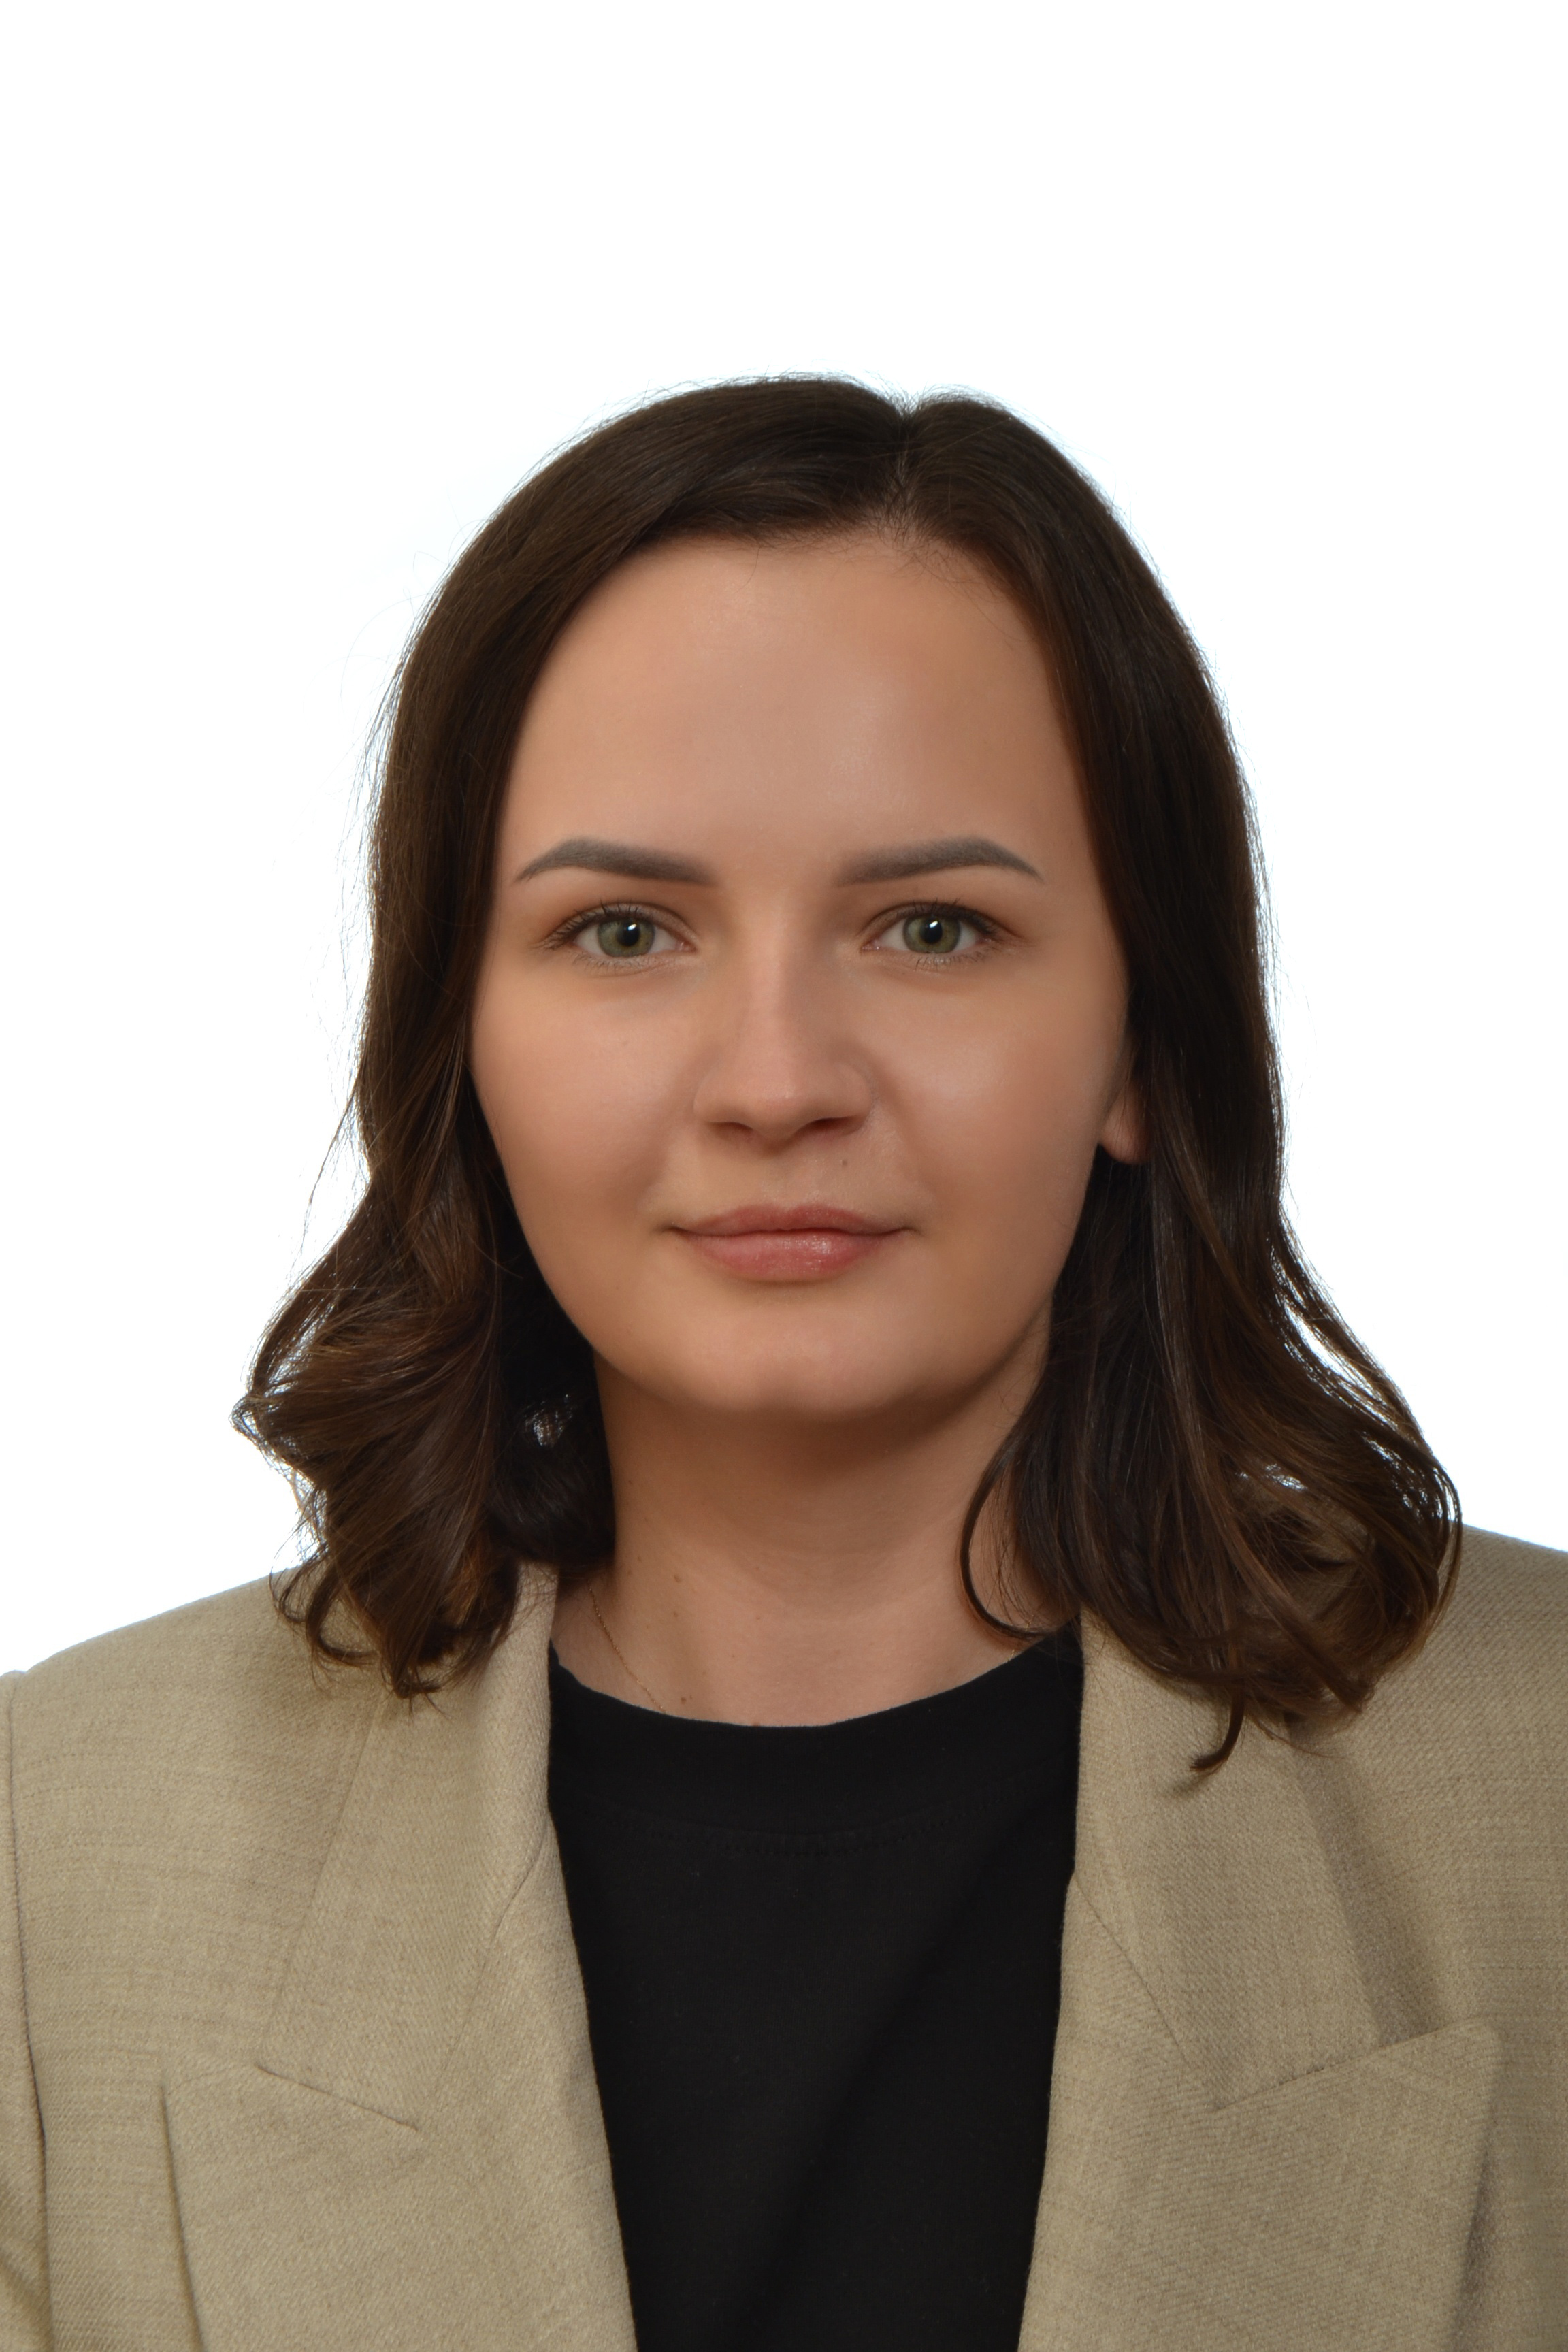 Agata Kotwica-Plisner</br>
Client Service Lead</br>
Wroclaw